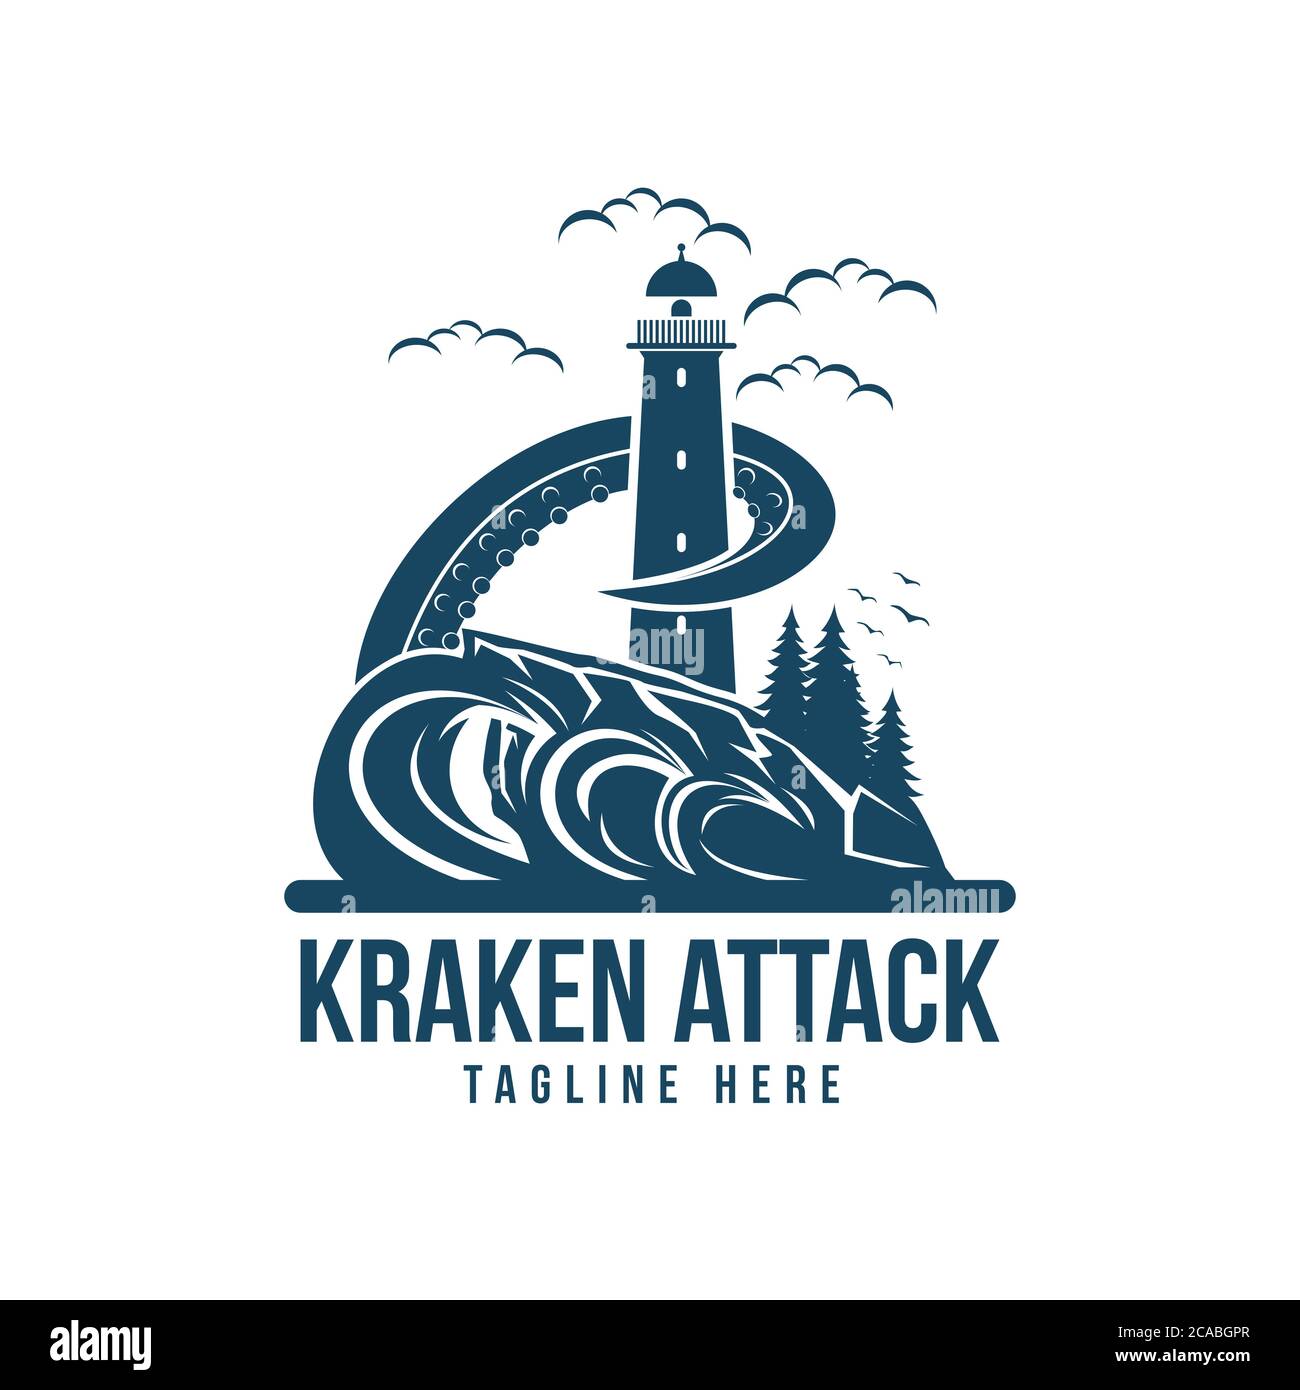 kraken attack vector illustration amazing design for your company or brand Stock Vector